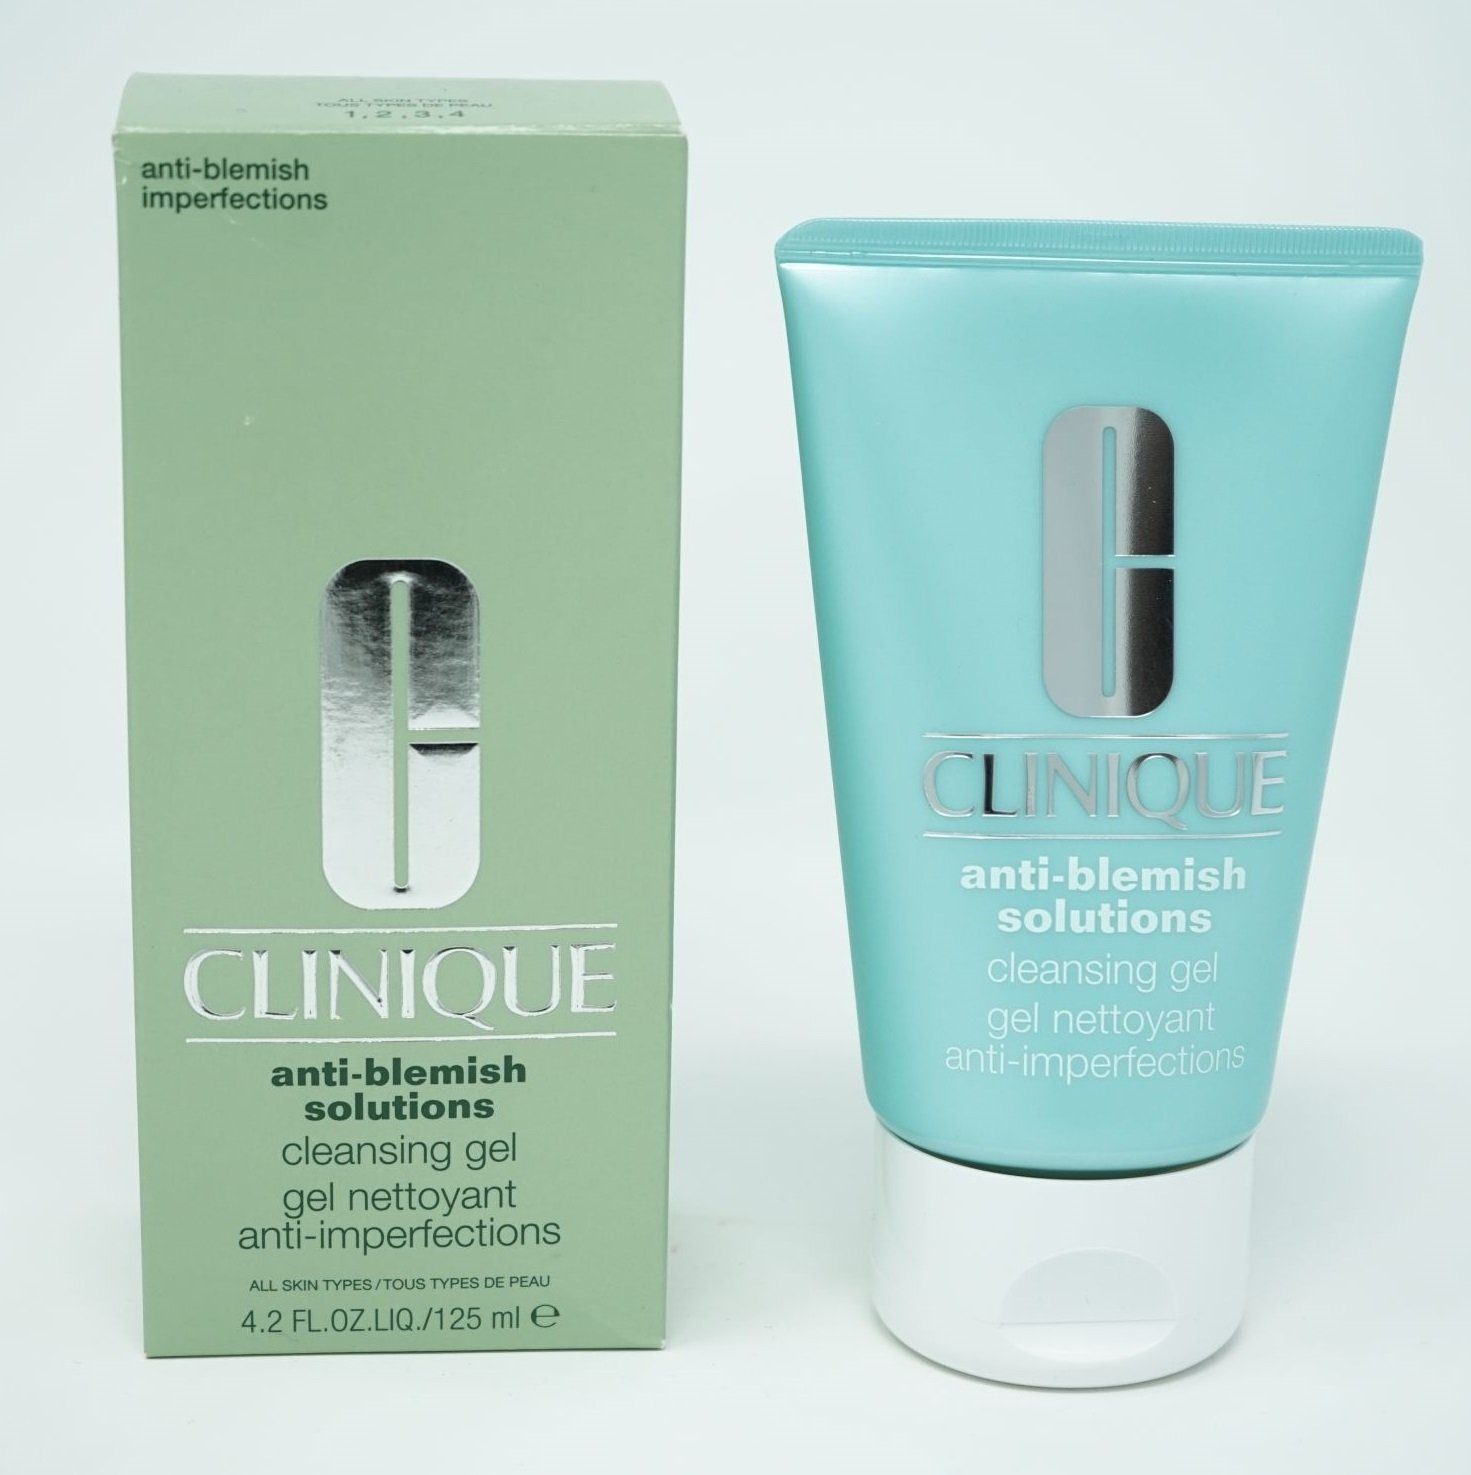 CLINIQUE Gesichtspflege Anti-Blemish Gel, Clinique Solutions Cleansing